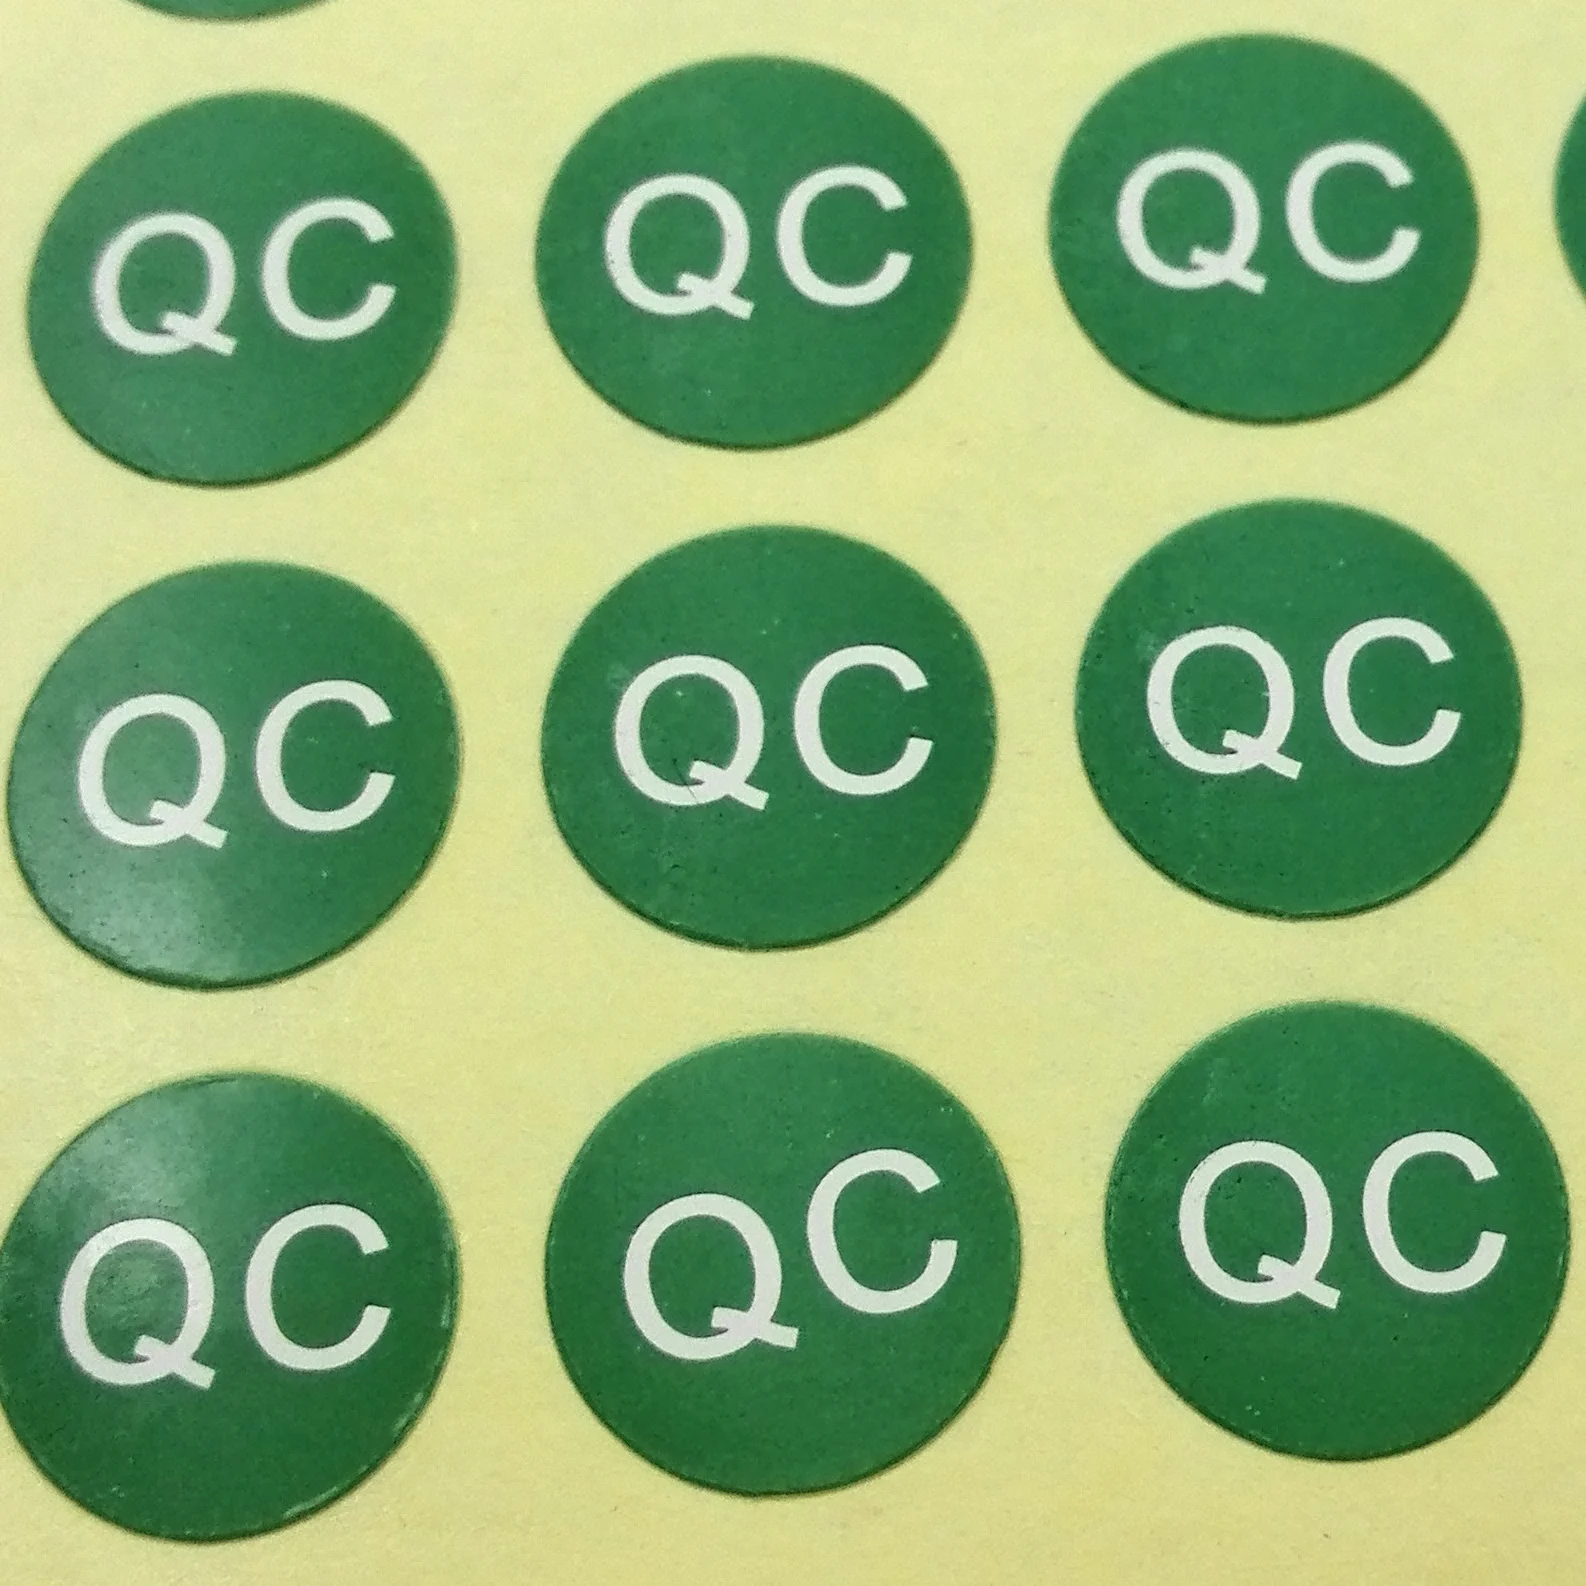 4000pcs/lot 10mm QC Self-adhesive paper label sticker for quality control, green color, Item No.FA06